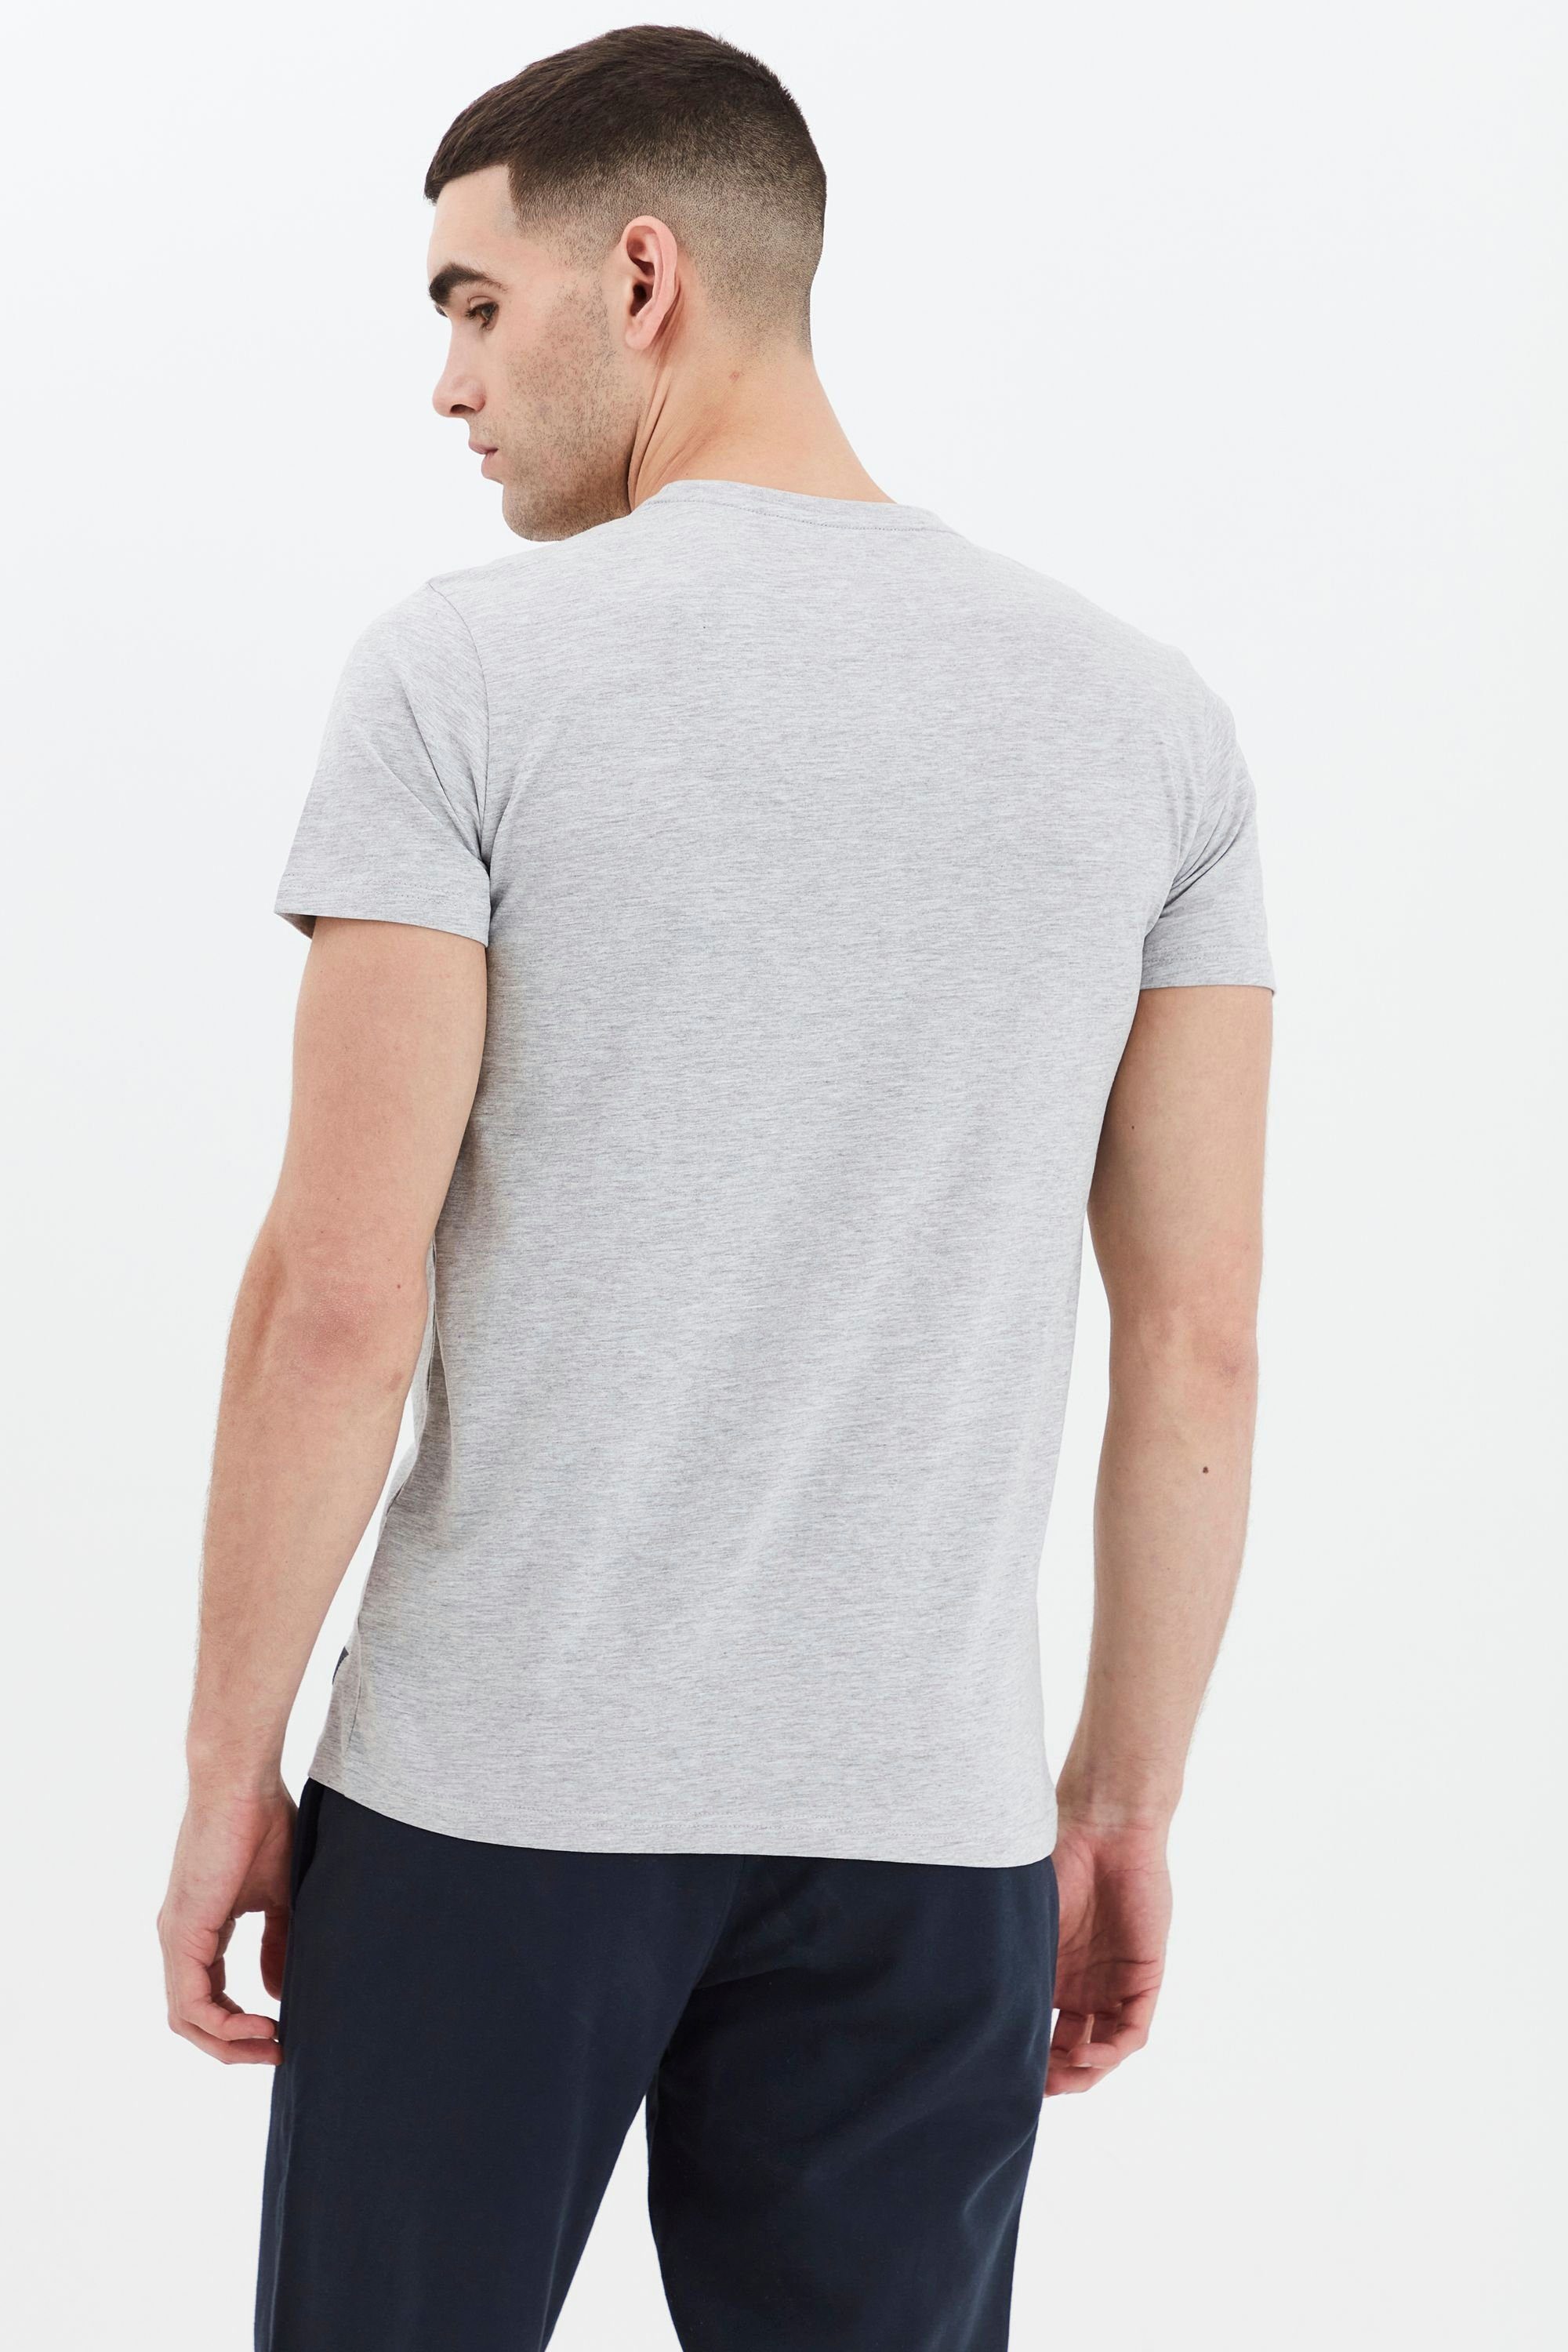 Solid Print-Shirt SDPedro T-Shirt Grey Print mit (1541011) Light Melange